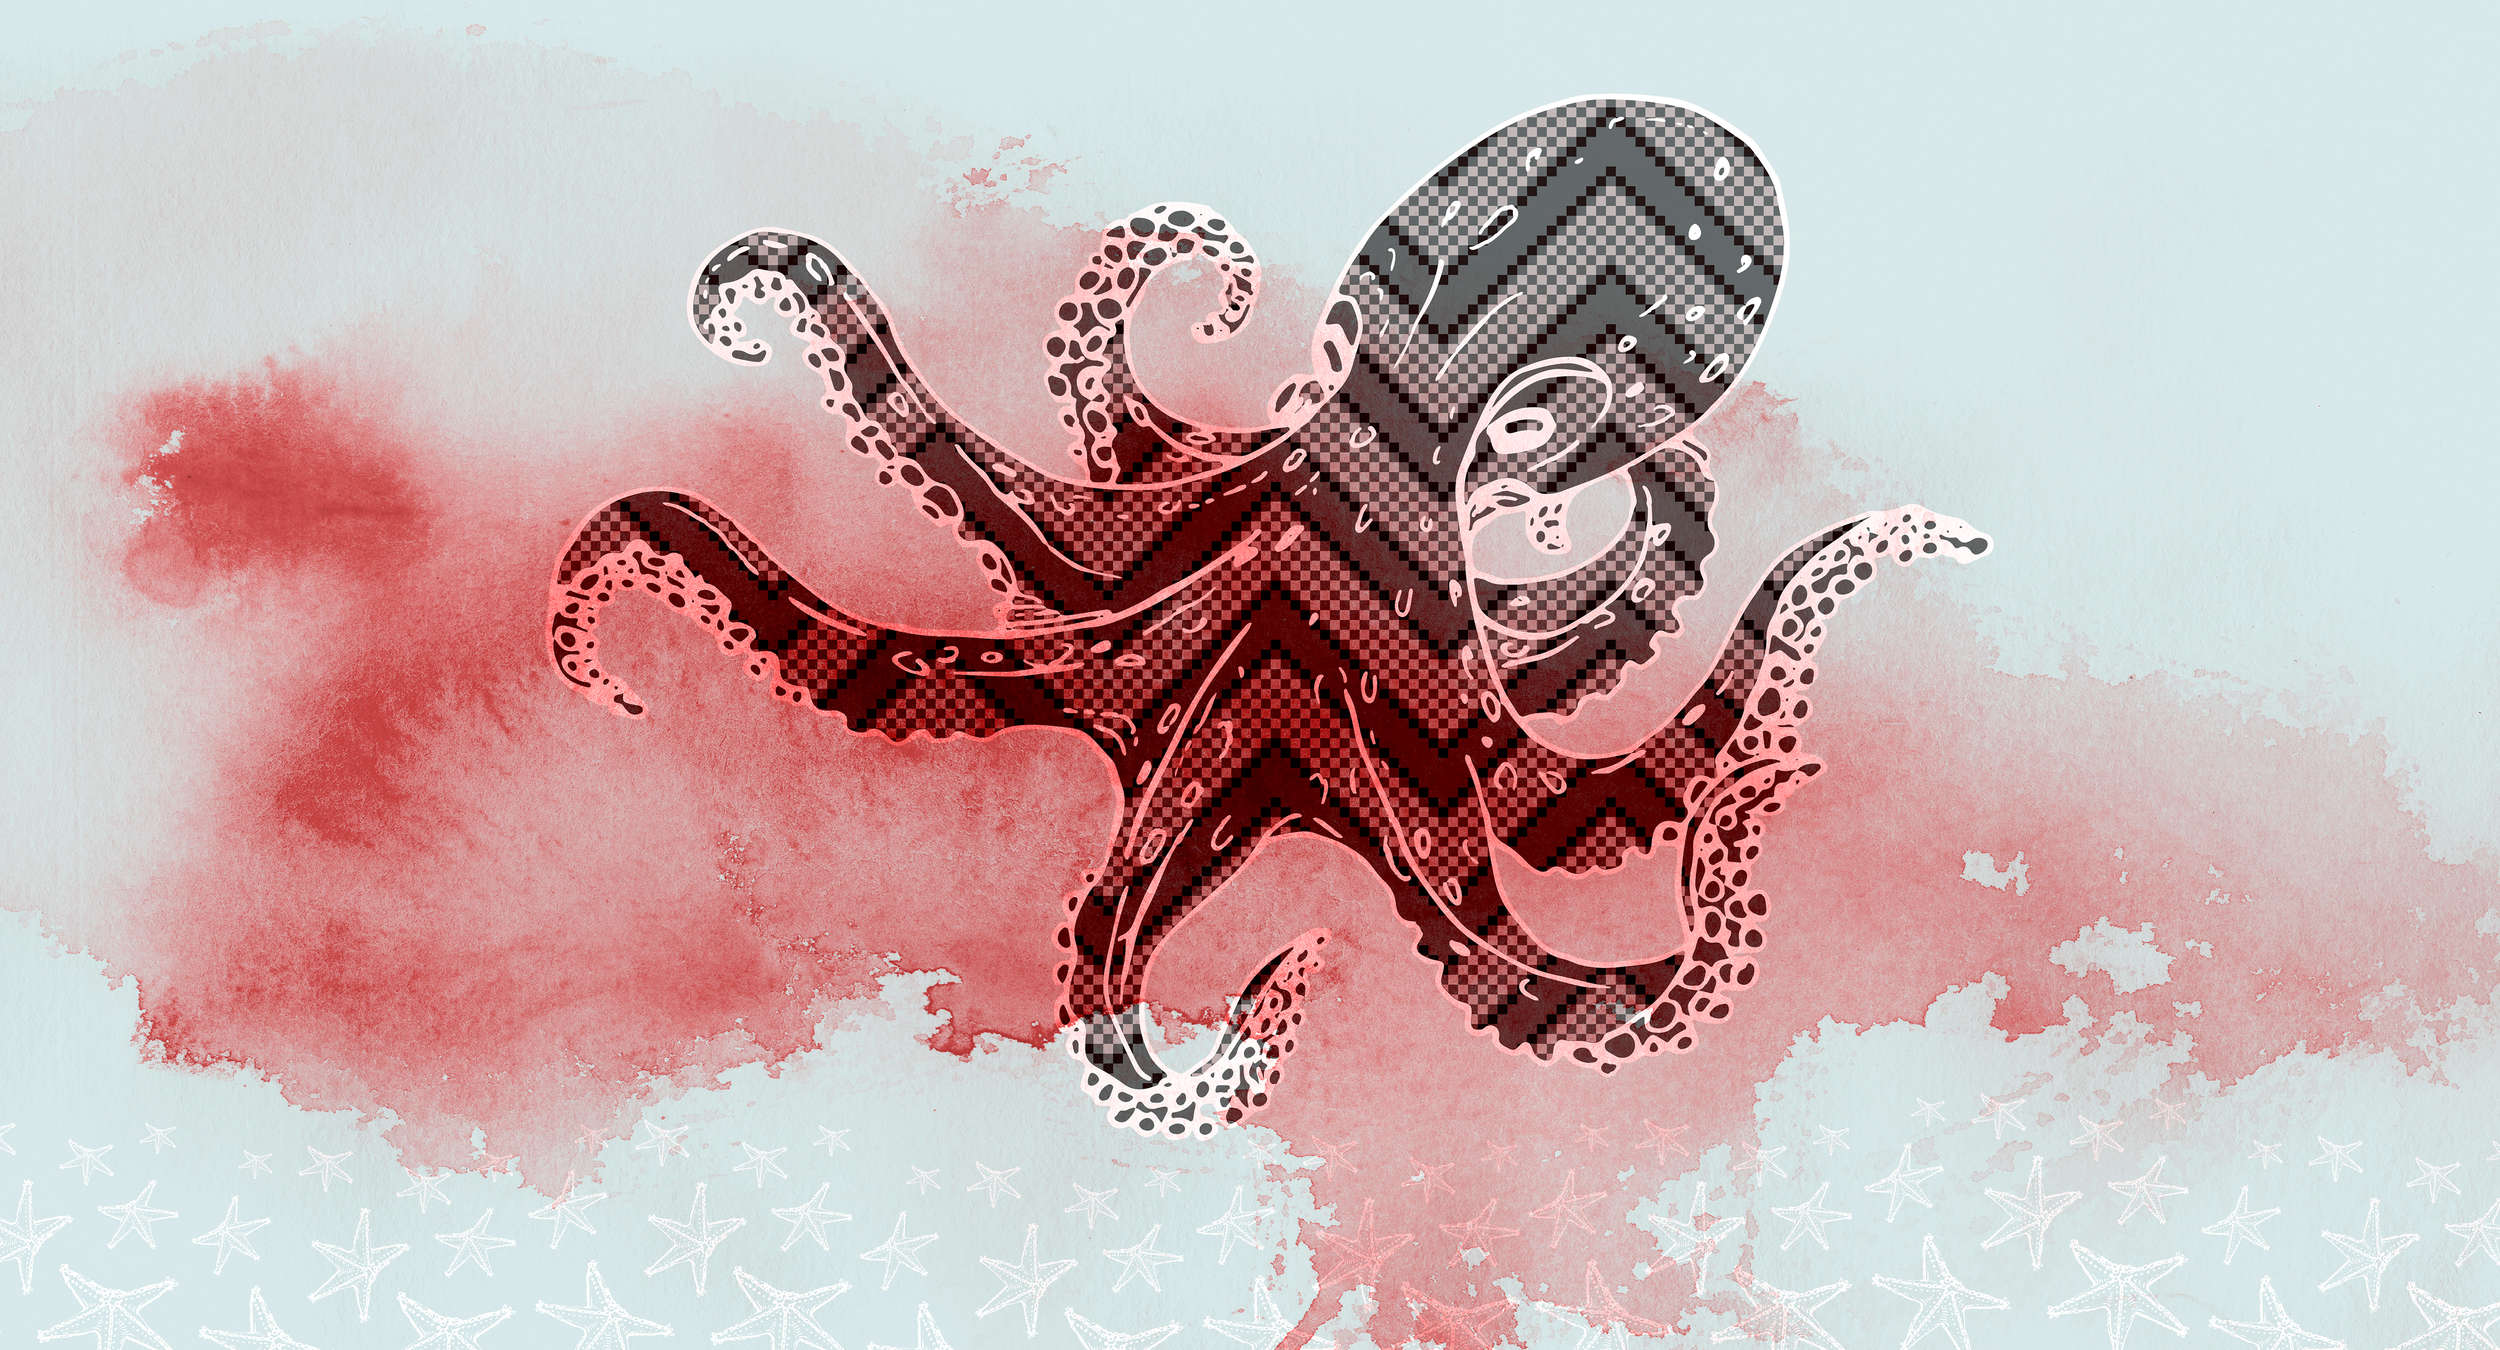             Oktopus Fototapete Grafik-Design & Seesternen – Rot, Blau, Weiß
        